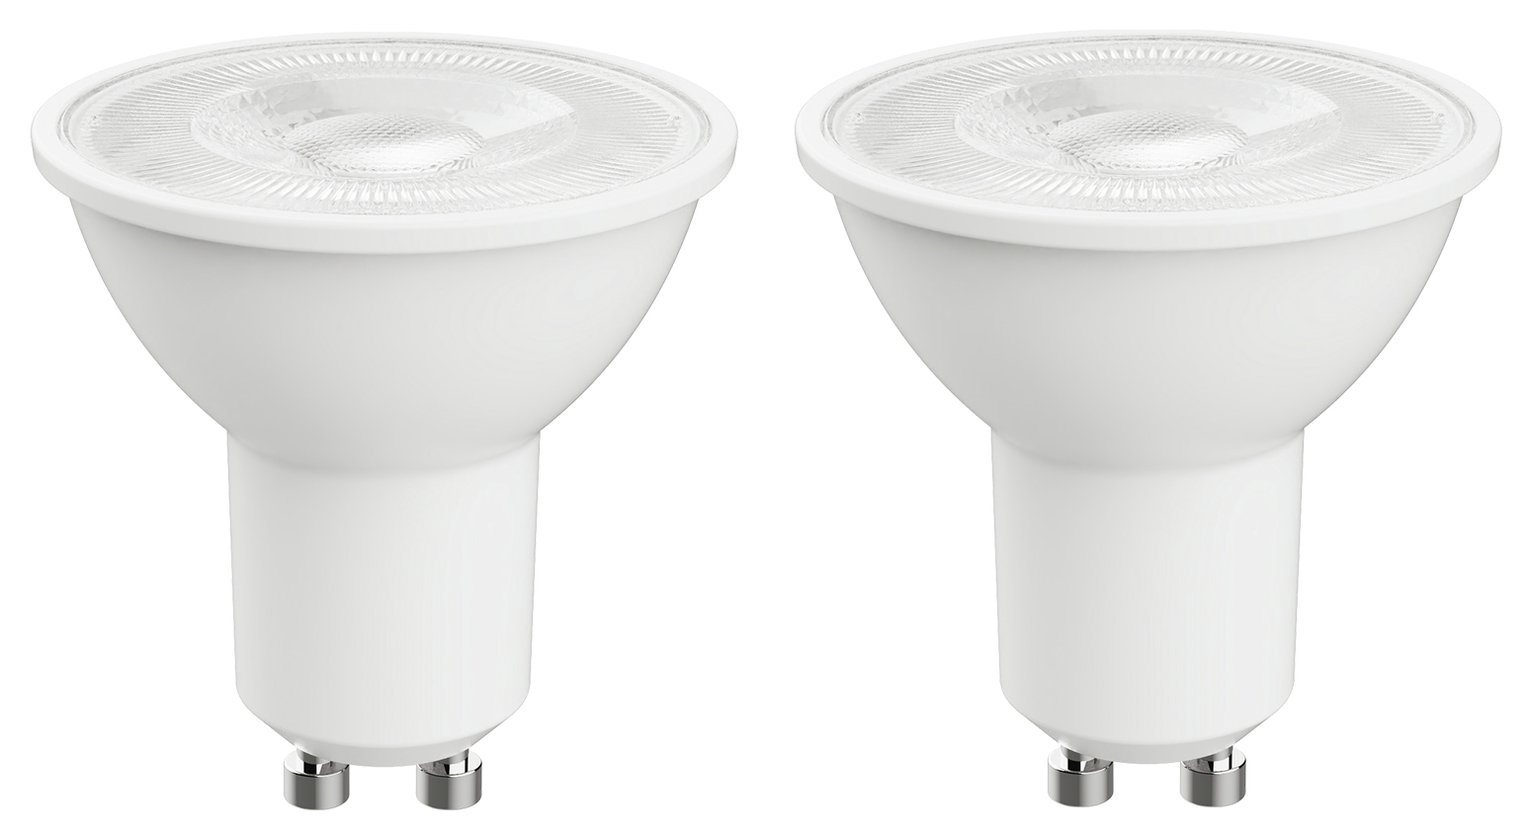 Argos Home 3.4W LED GU10 Light Bulbs - 2 Pack